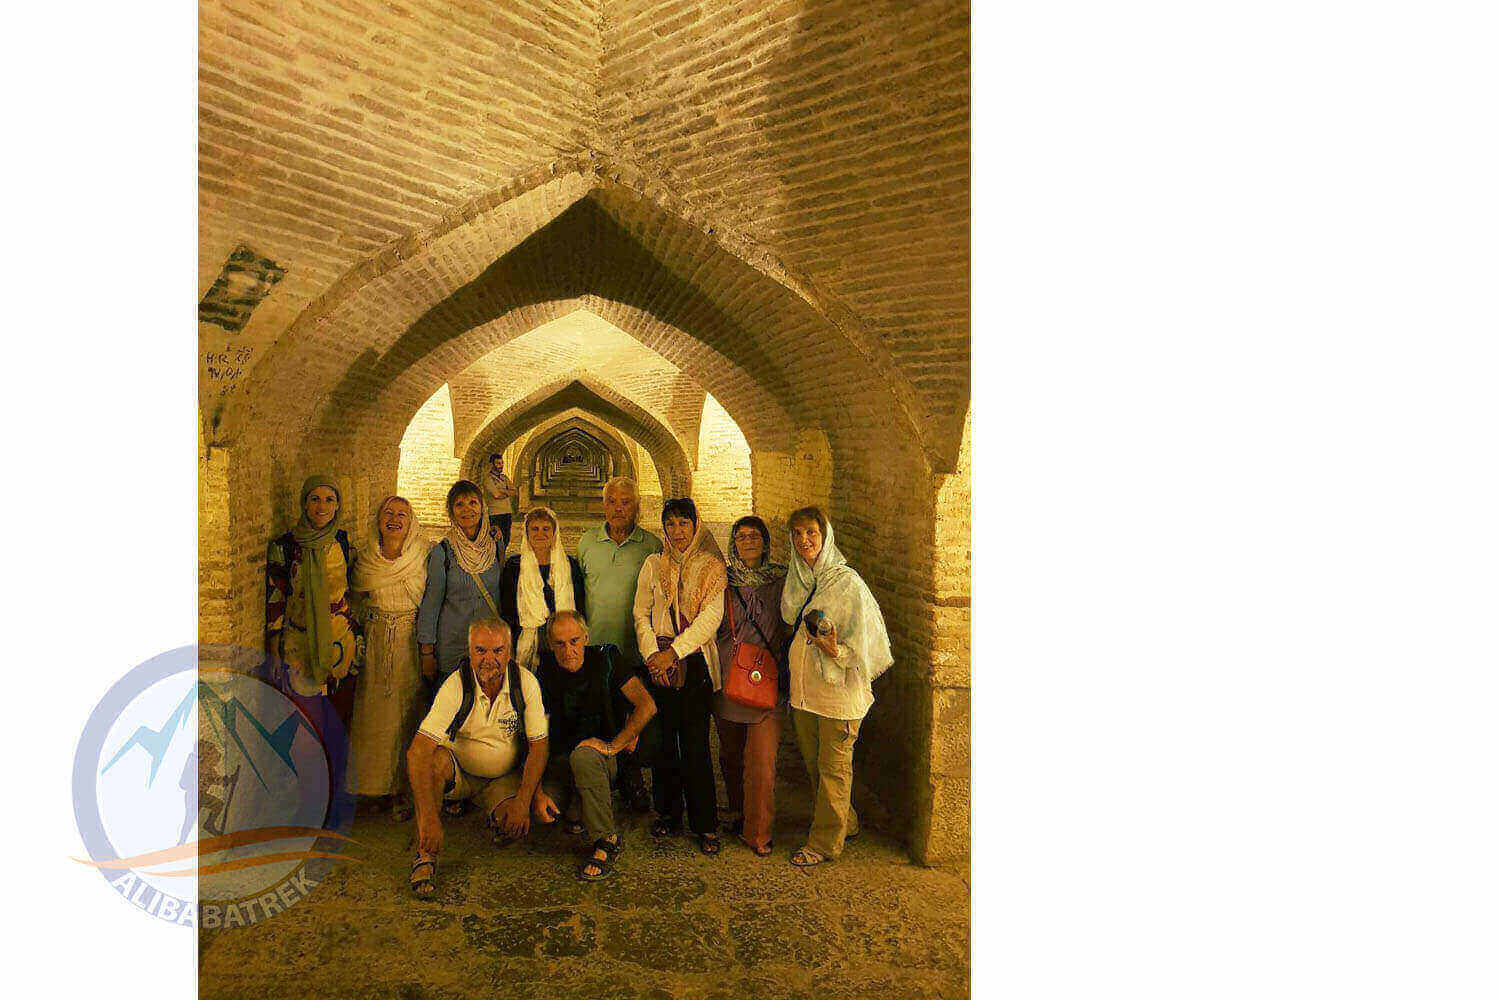 Alibabatrek iran tour Iran journey Tour to Iran in 3 weeks Explore iran isfahan Si-o-se-Pol Bridge